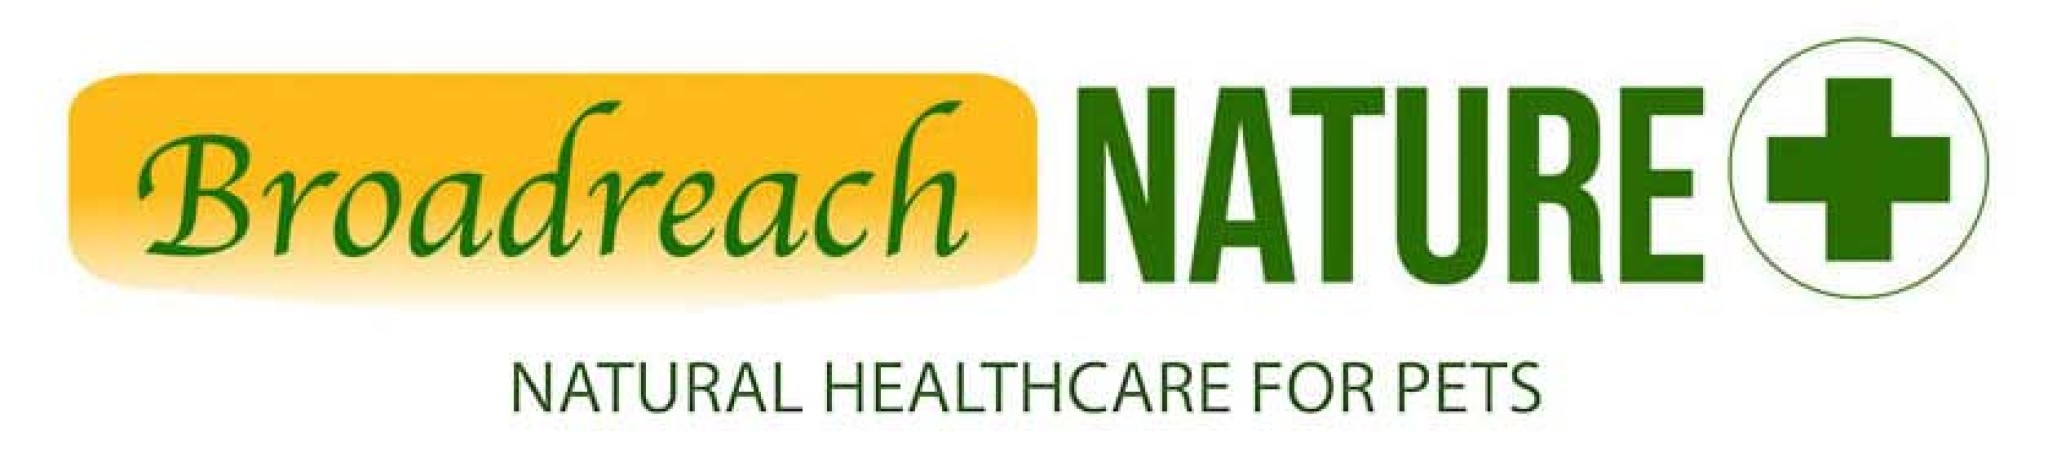 Broadreach-Nature-Logo.jpg